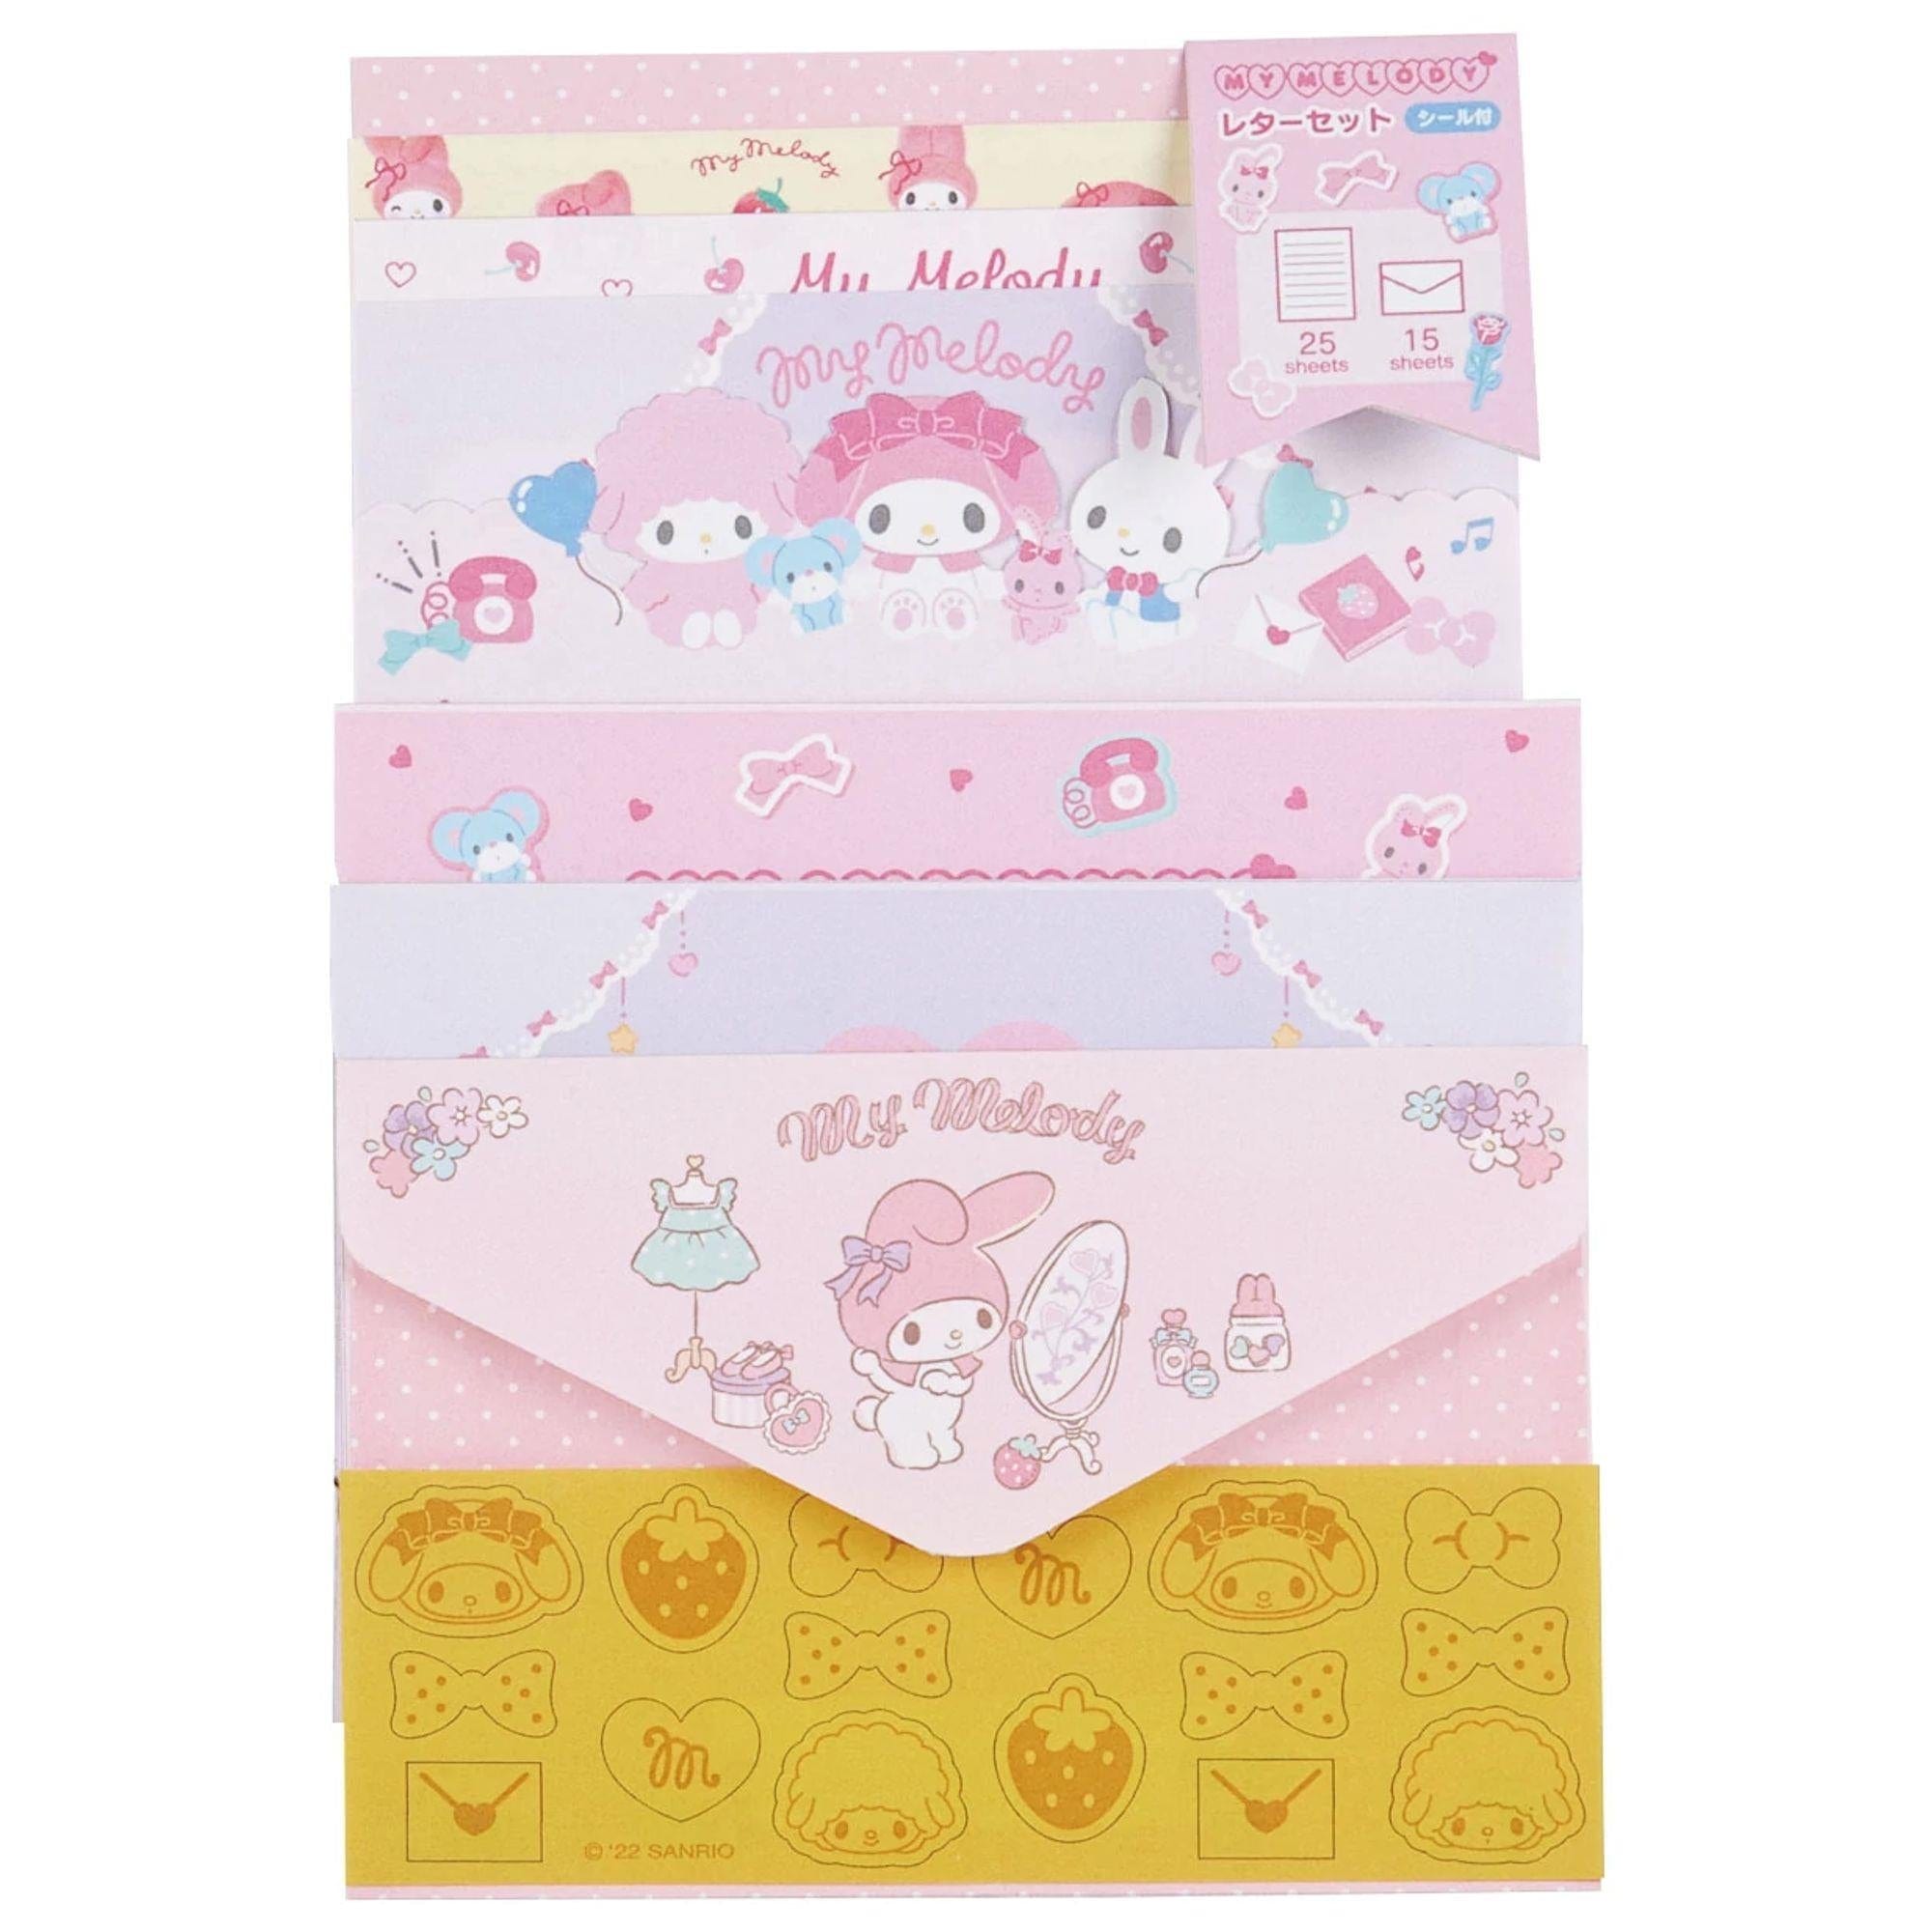 Enesco Sanrio Letter Set My Melody Kawaii Gifts 4550337589236